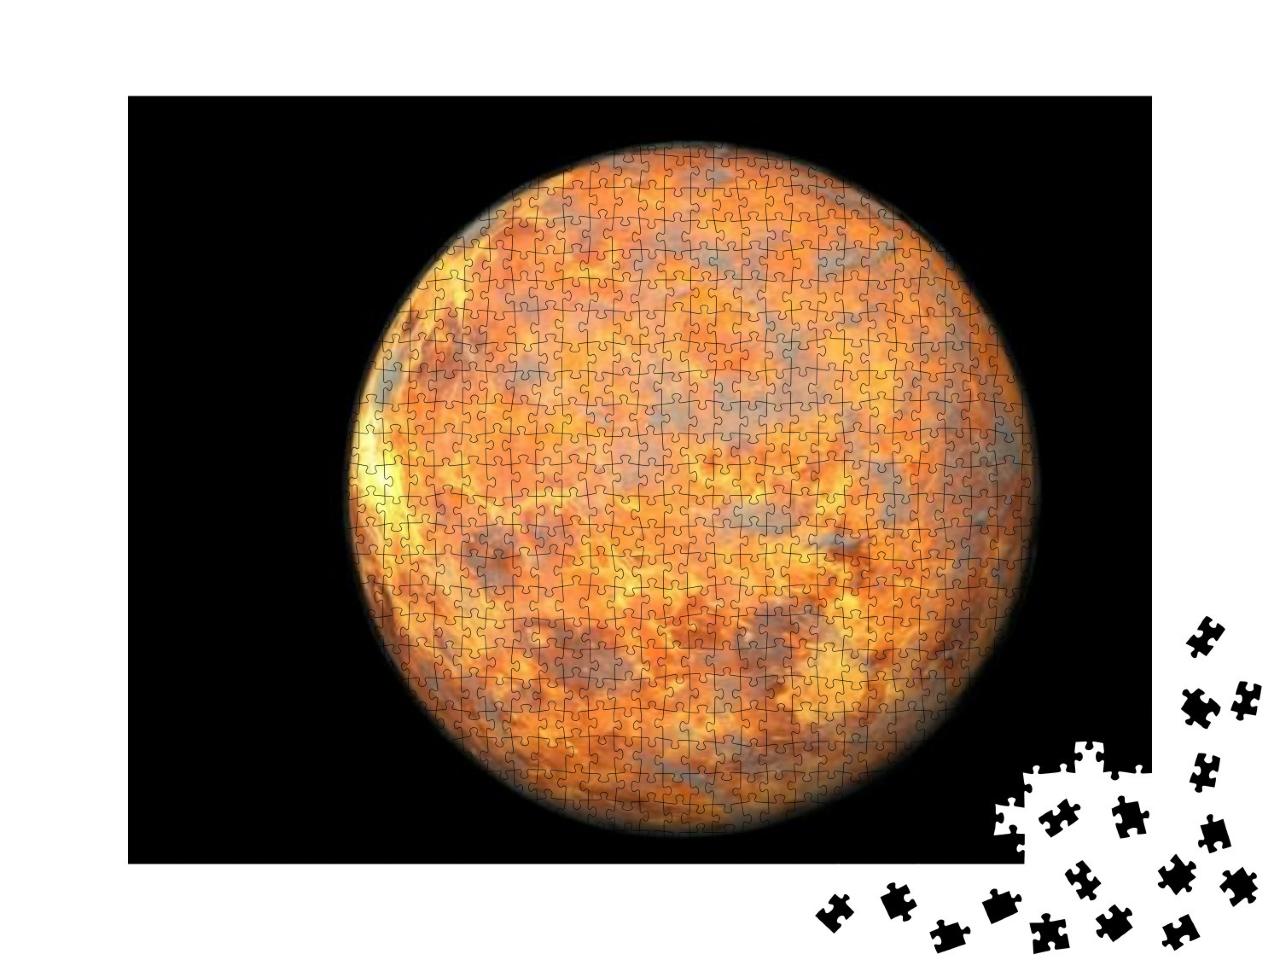 Puzzle 1000 Teile „Planet Venus, NASA-Bildmaterial“